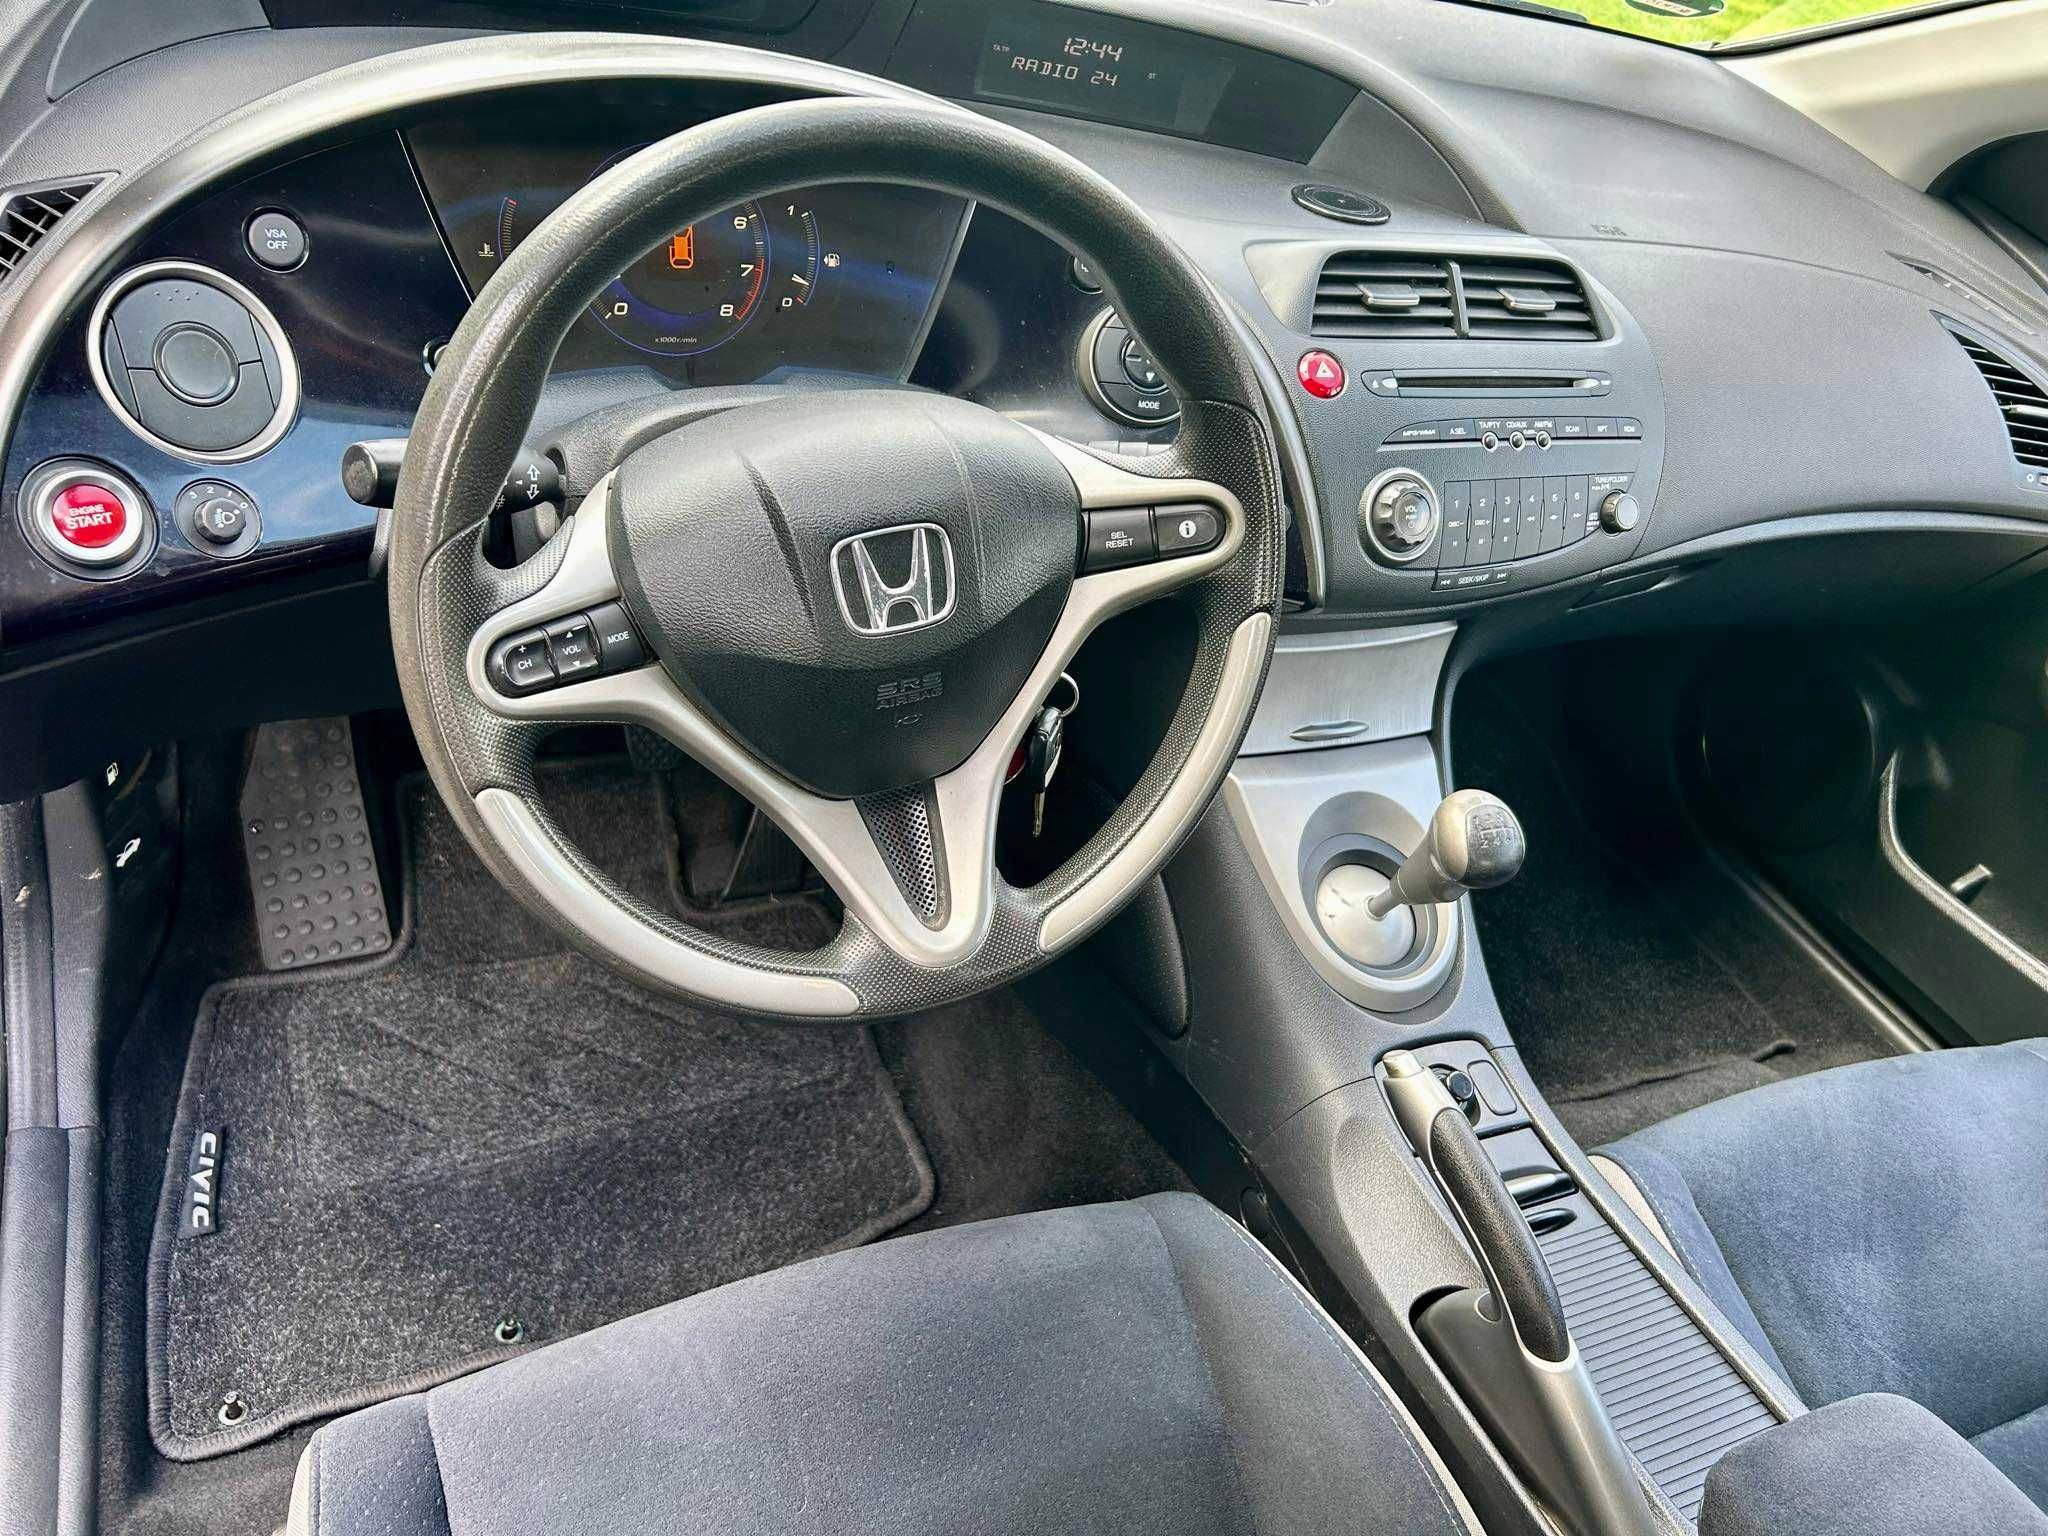 Honda Civic 1.8benzyna Alu 138tys. km